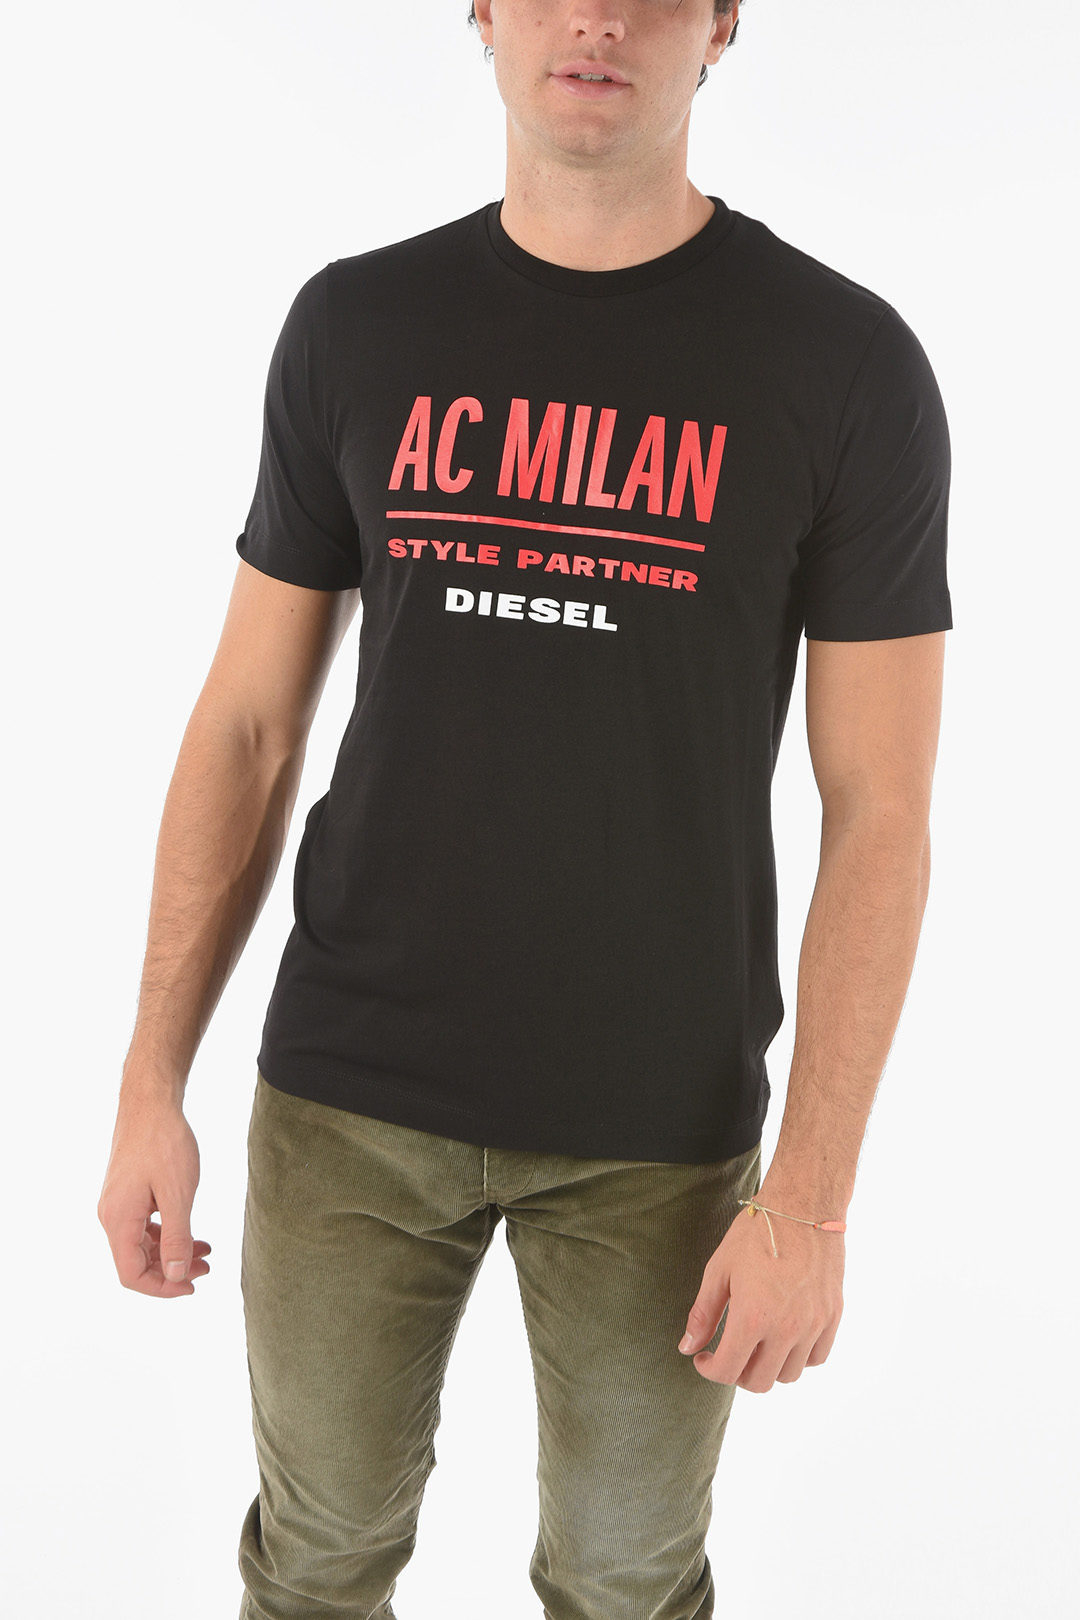 Diesel AC MILAN Neck CAPSULE Printed T-Shirt men - Glamood Outlet